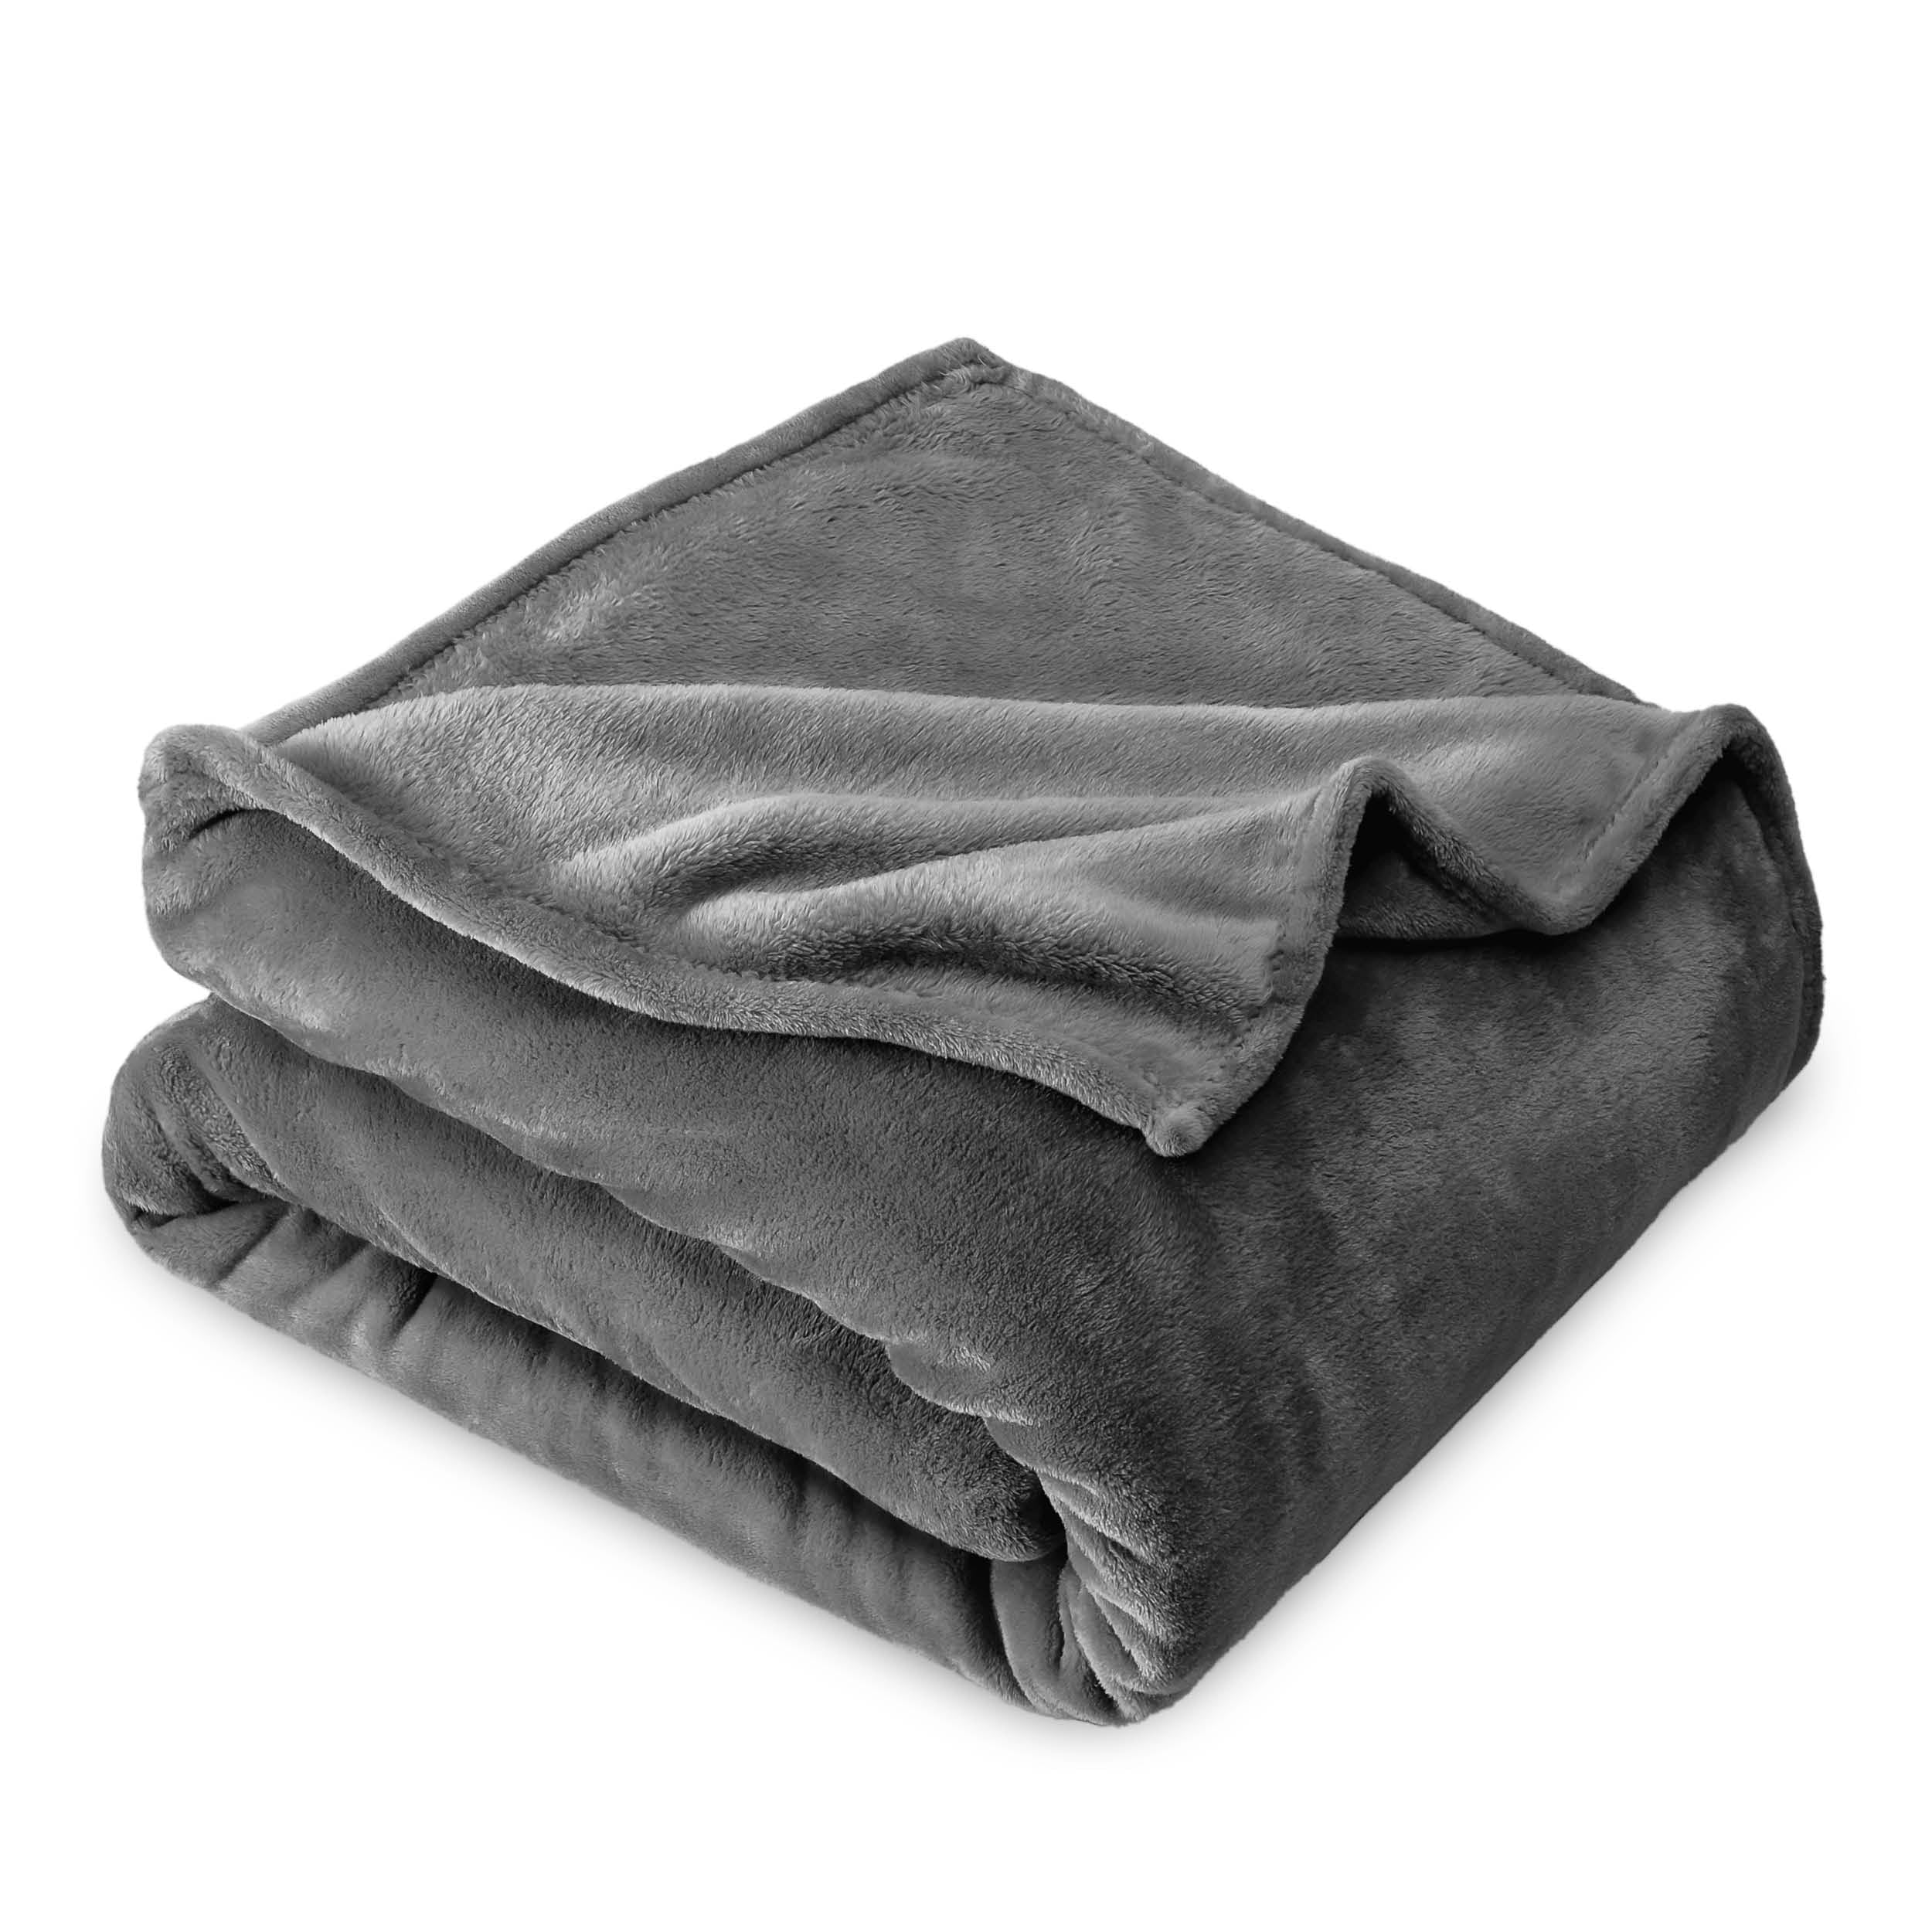 Bare Home Microplush Fleece Blanket Plush Ultra Soft Fullqueen Gray